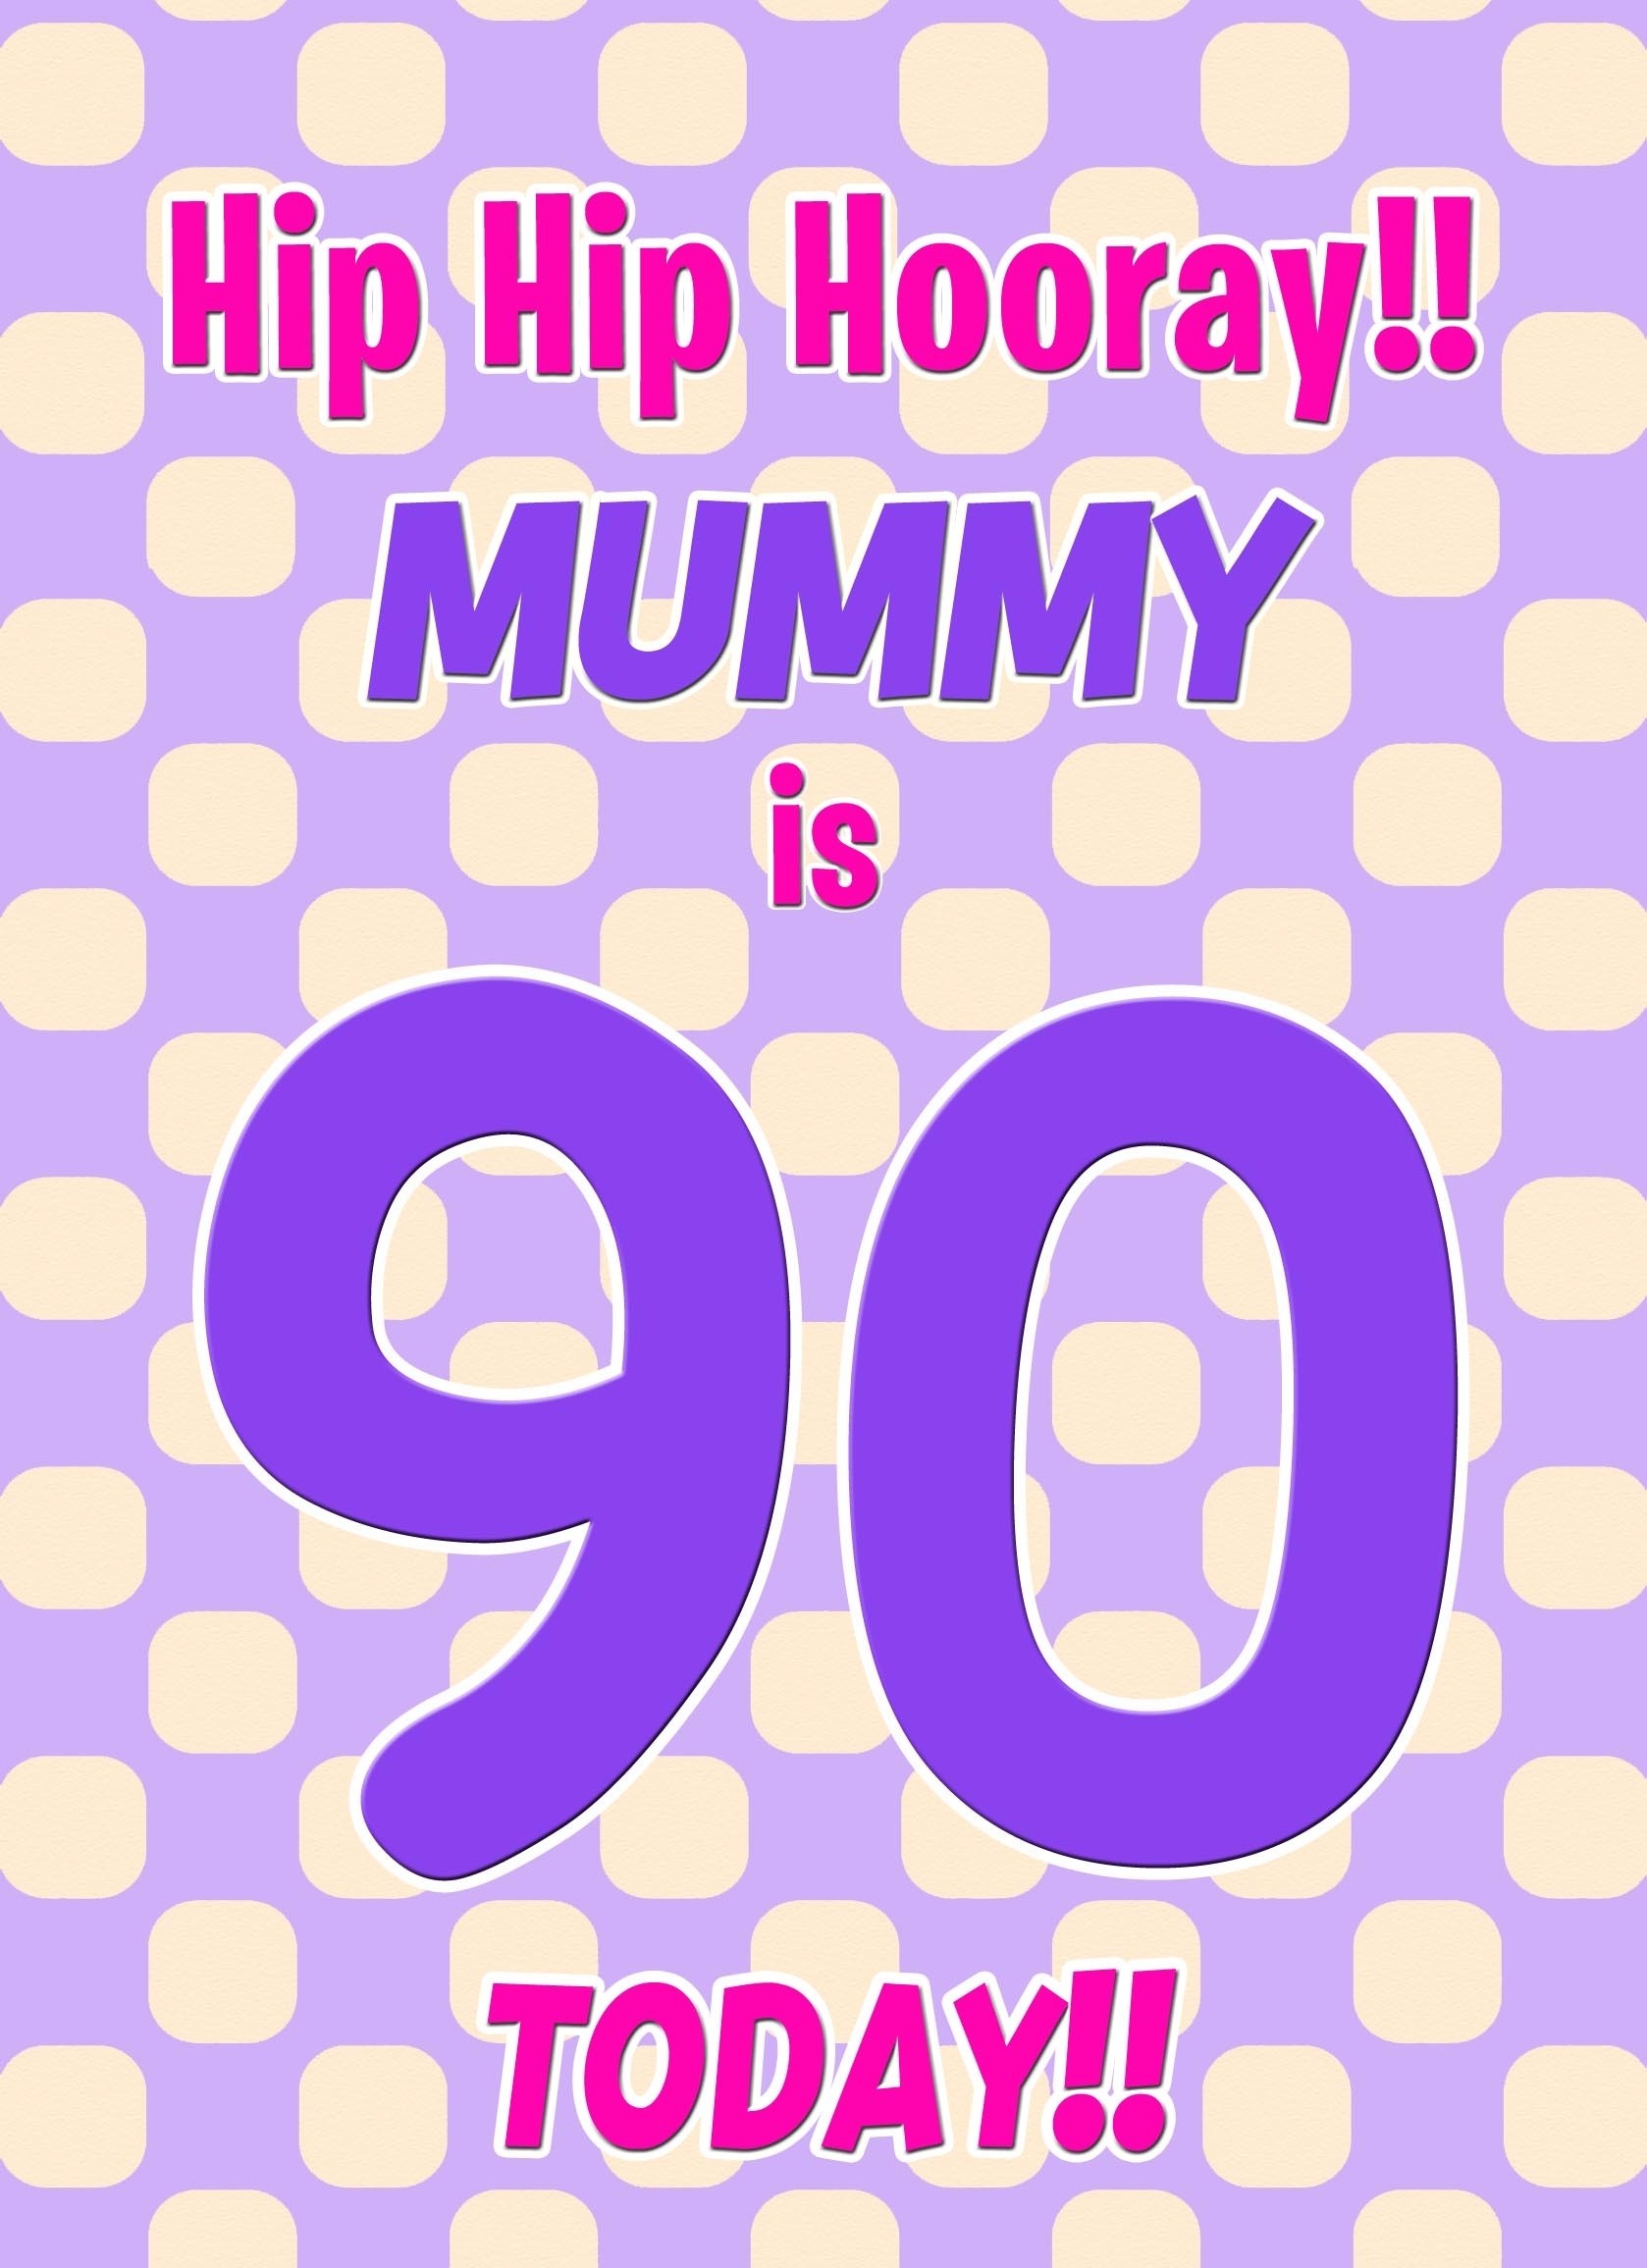 Mummy 90th Birthday Card (Purple Spots)